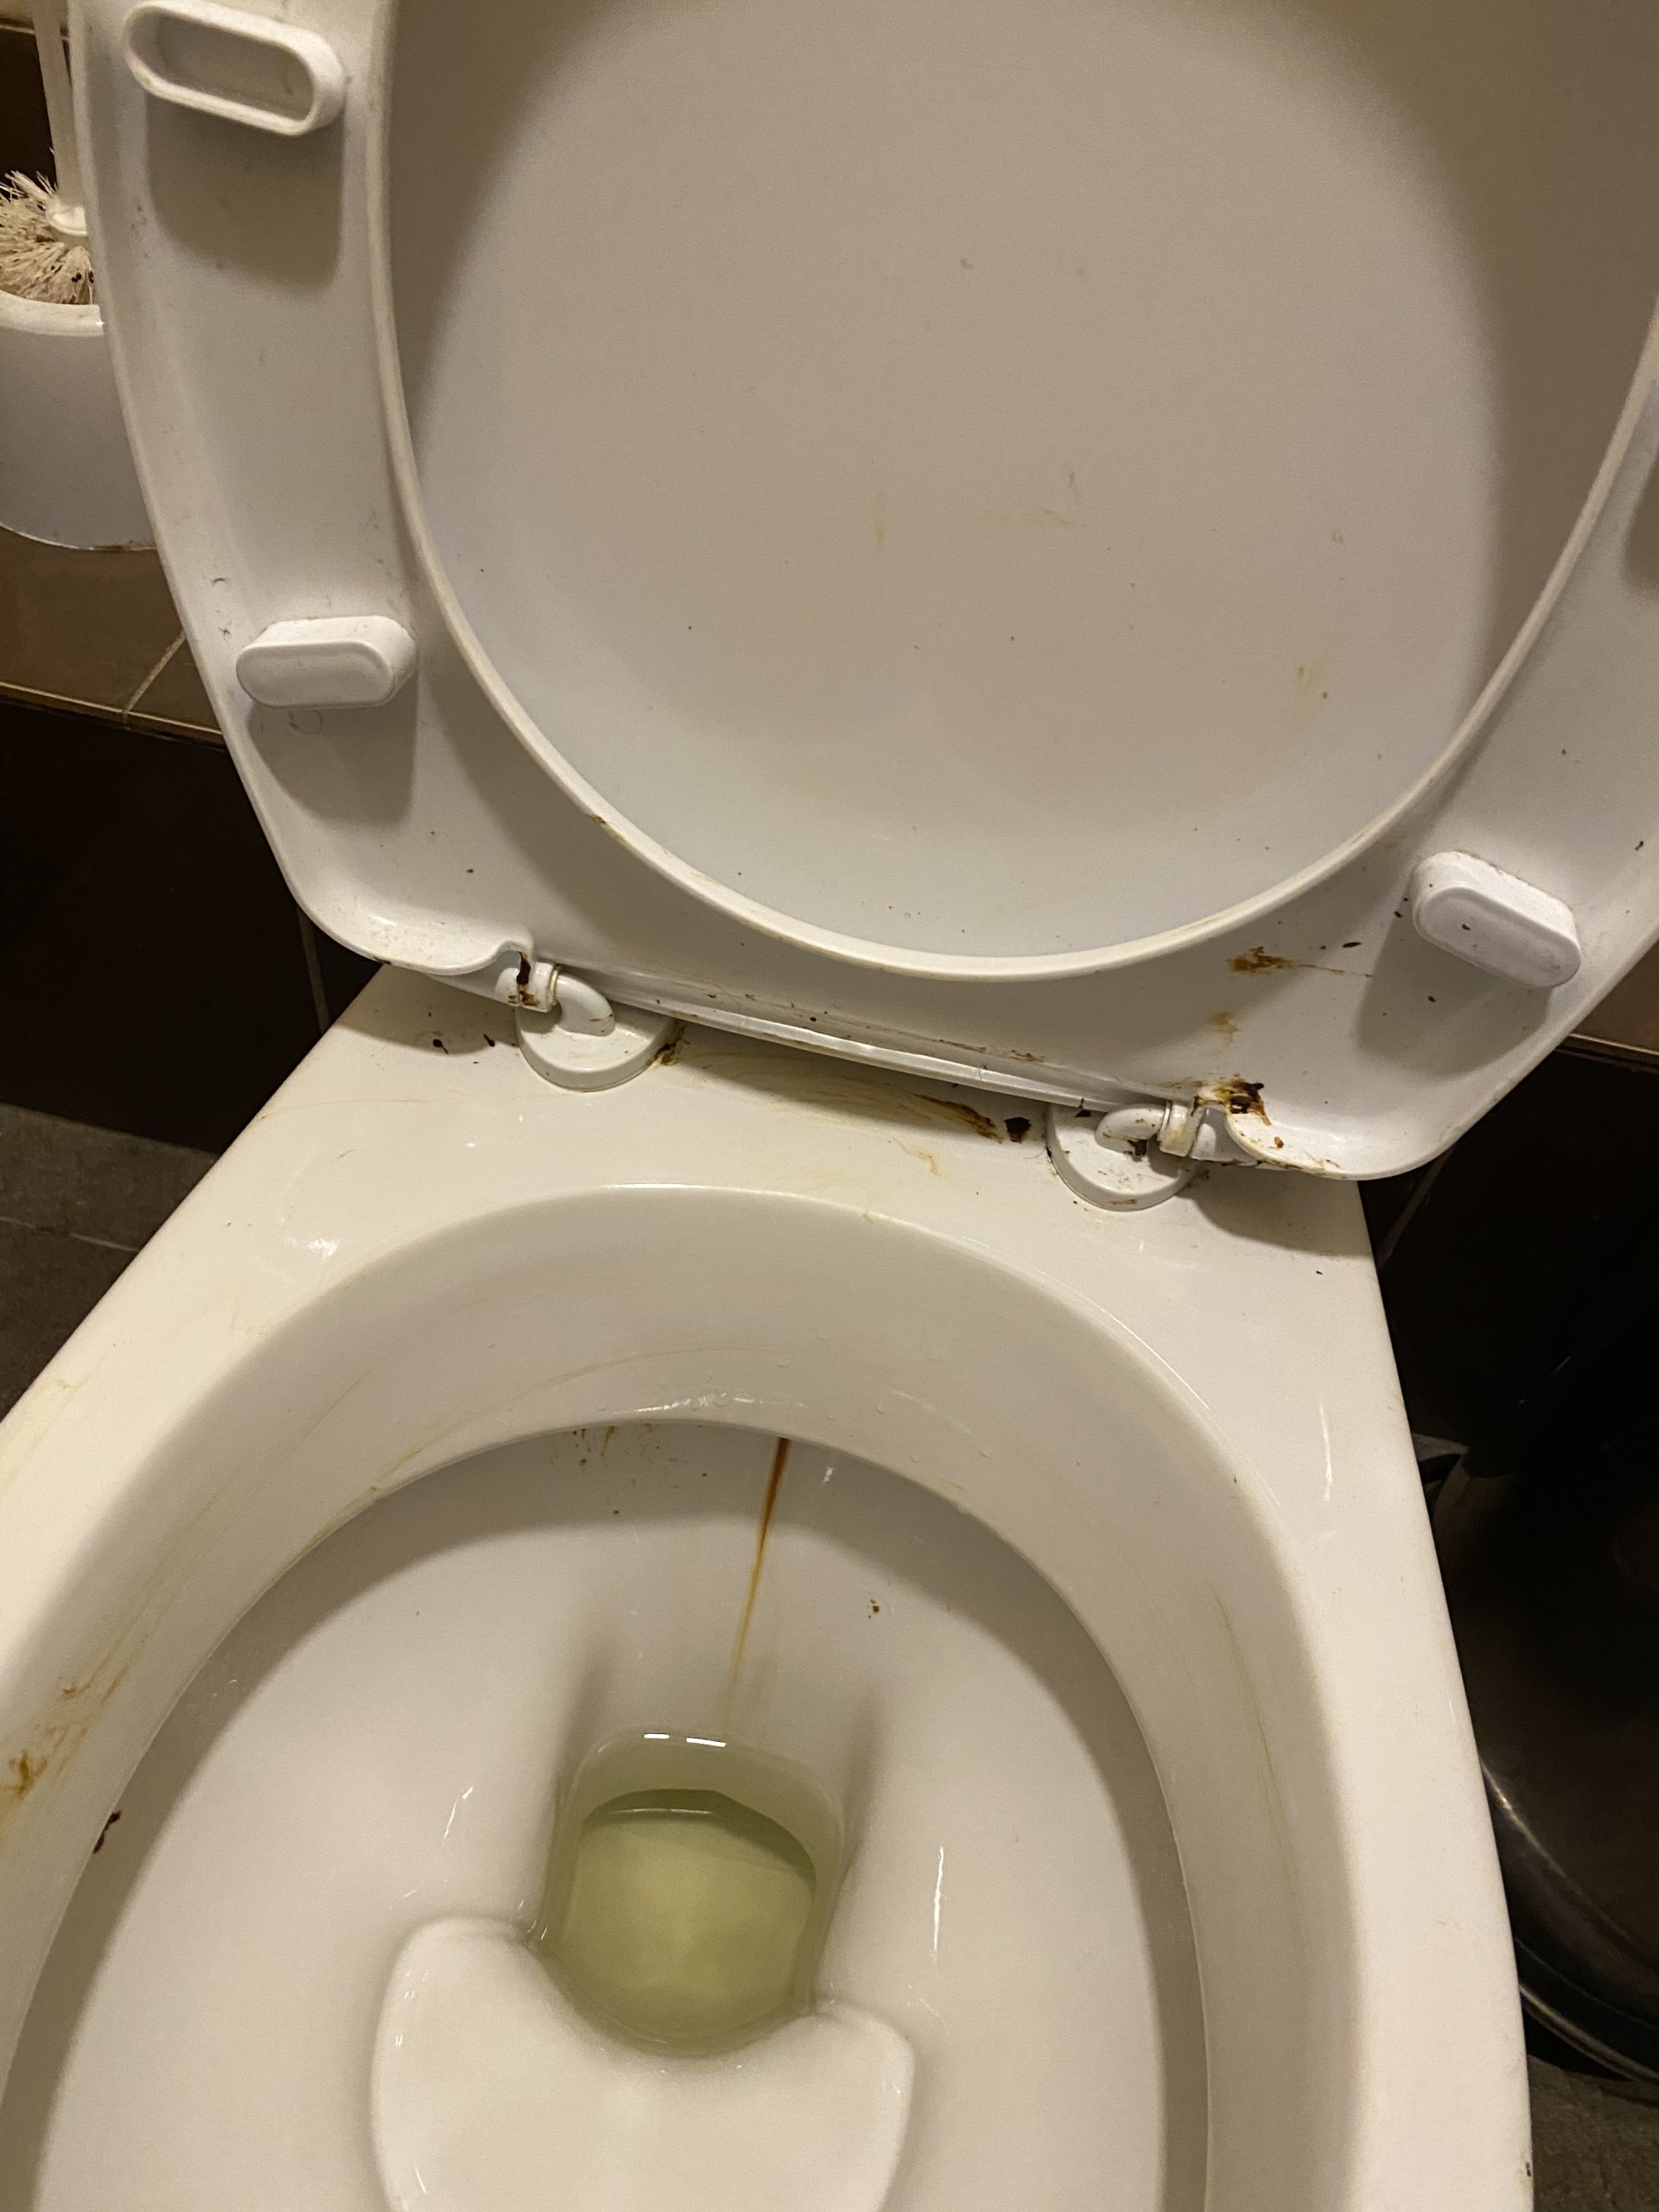 what does amniotic fluid look like in toilet